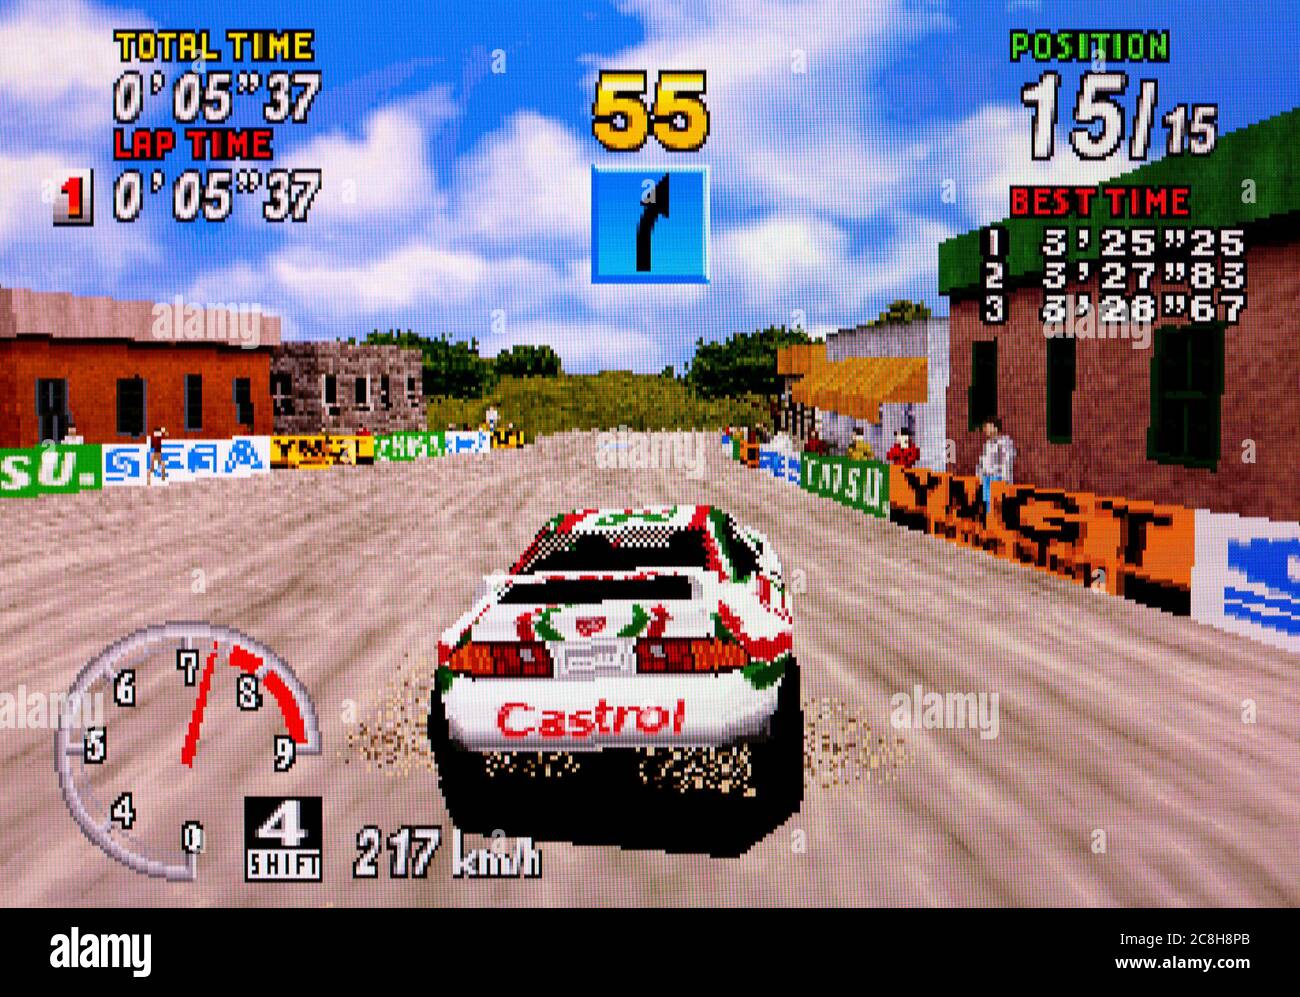 Sega rally championship hi-res stock photography and images - Alamy